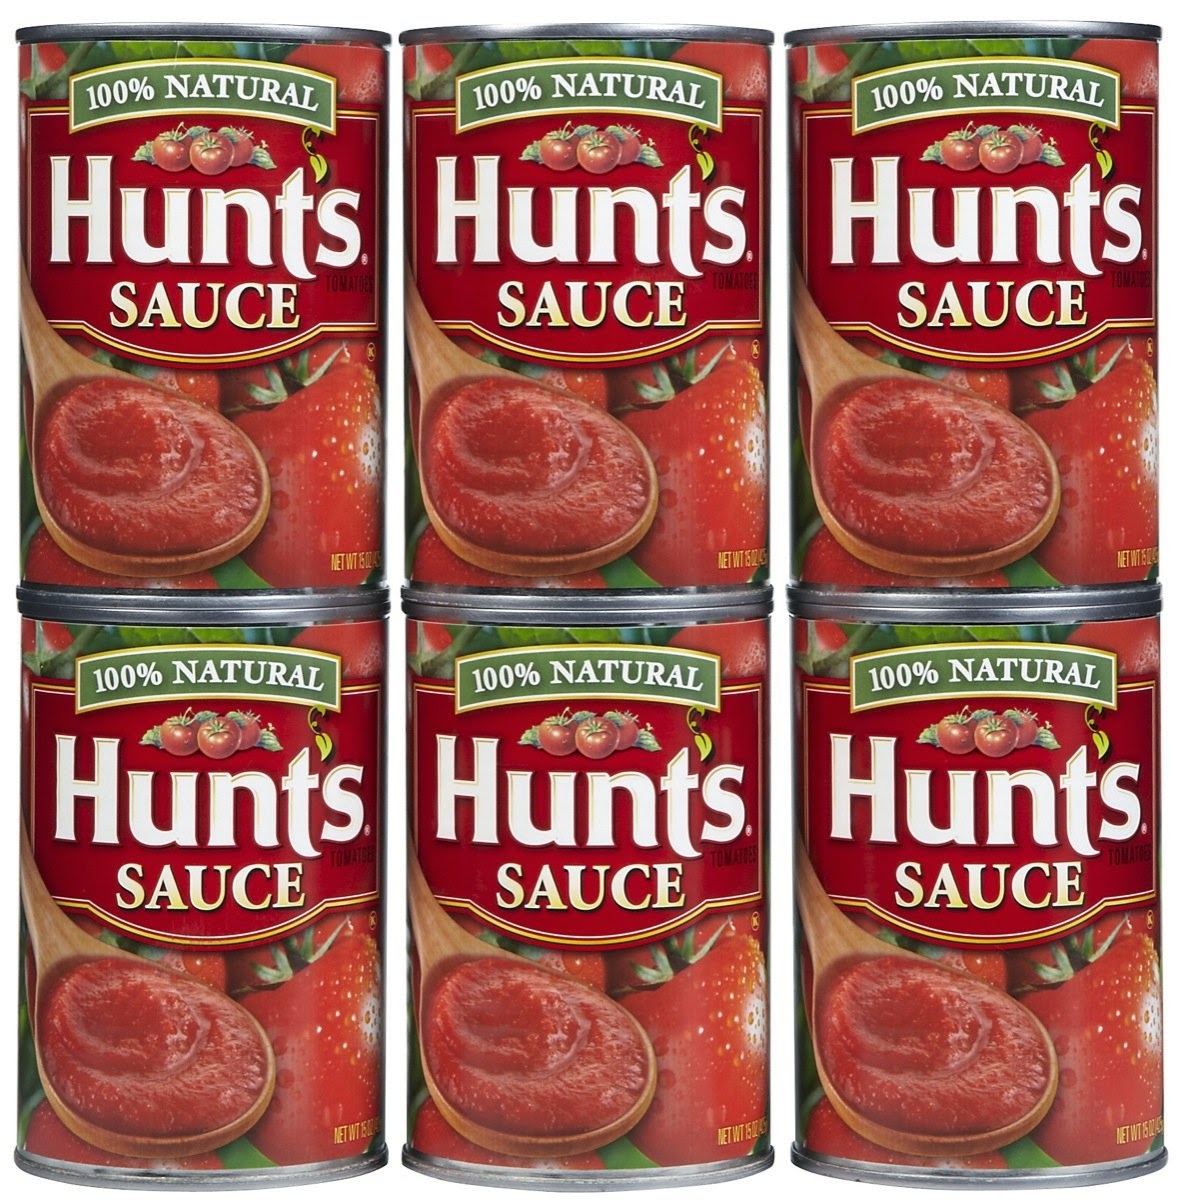 SavingStar: Free Can of Hunt's Tomato Sauce